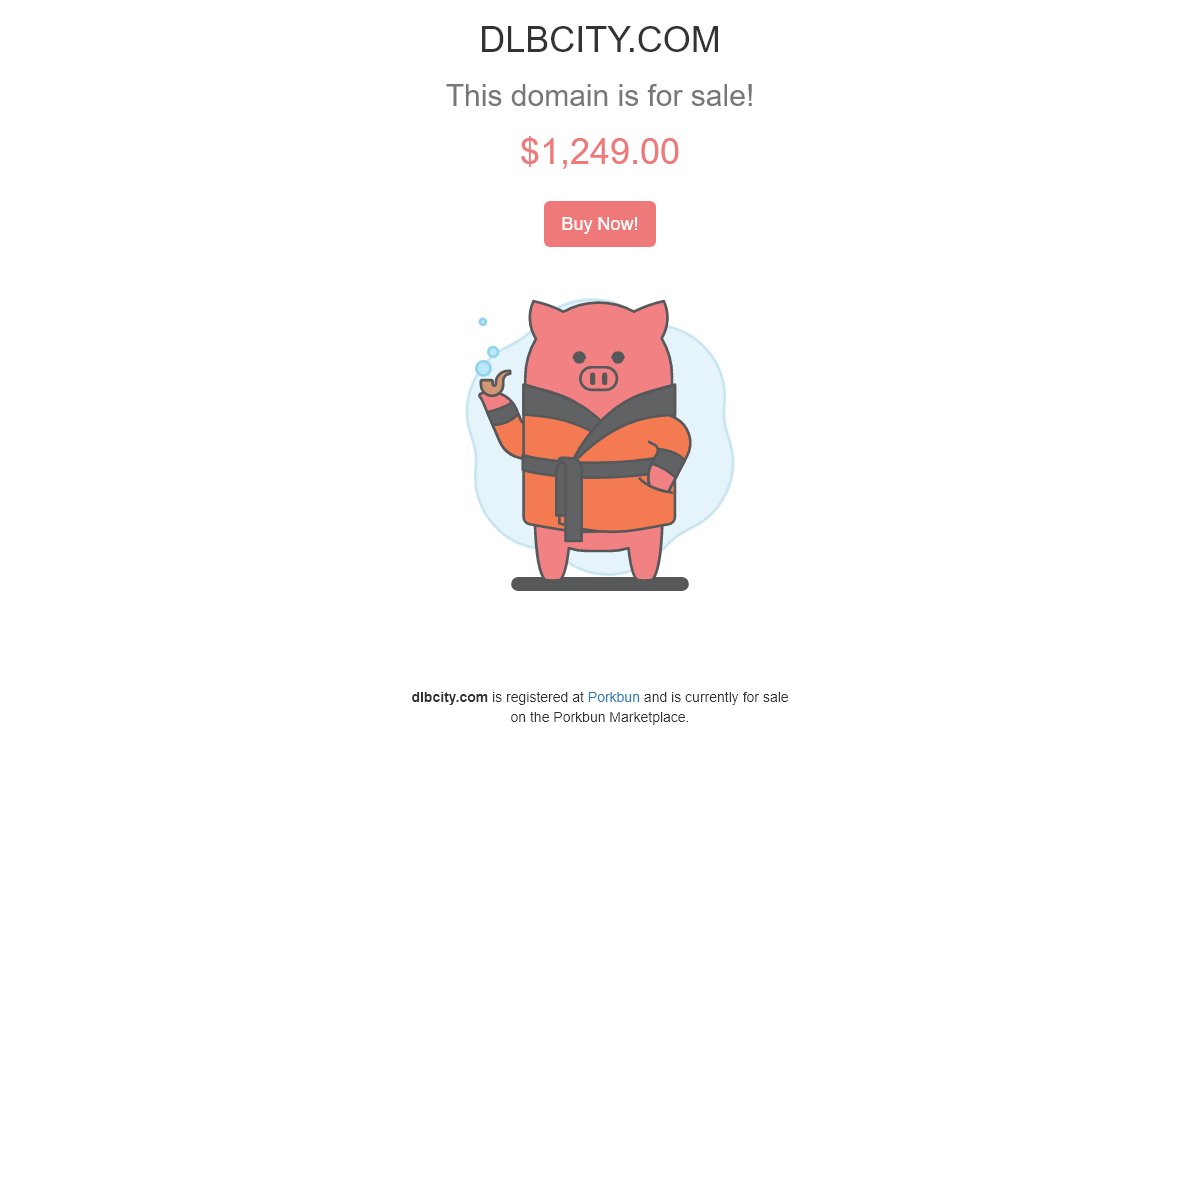 A complete backup of dlbcity.com